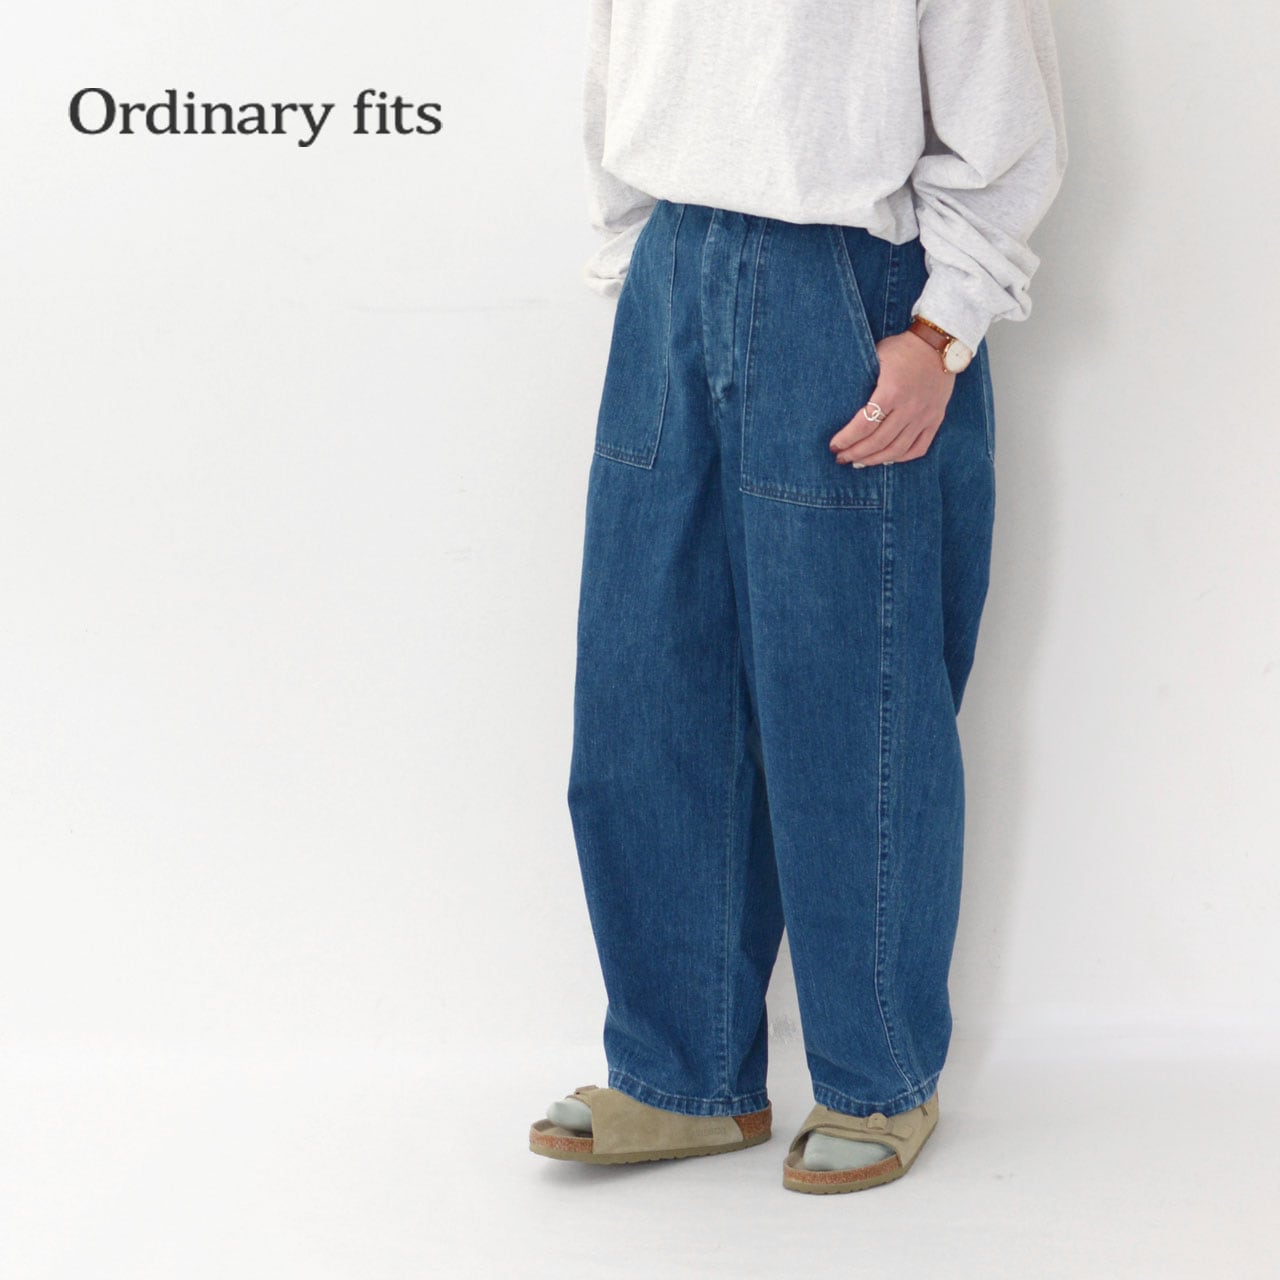 ordinary fits | refalt online store